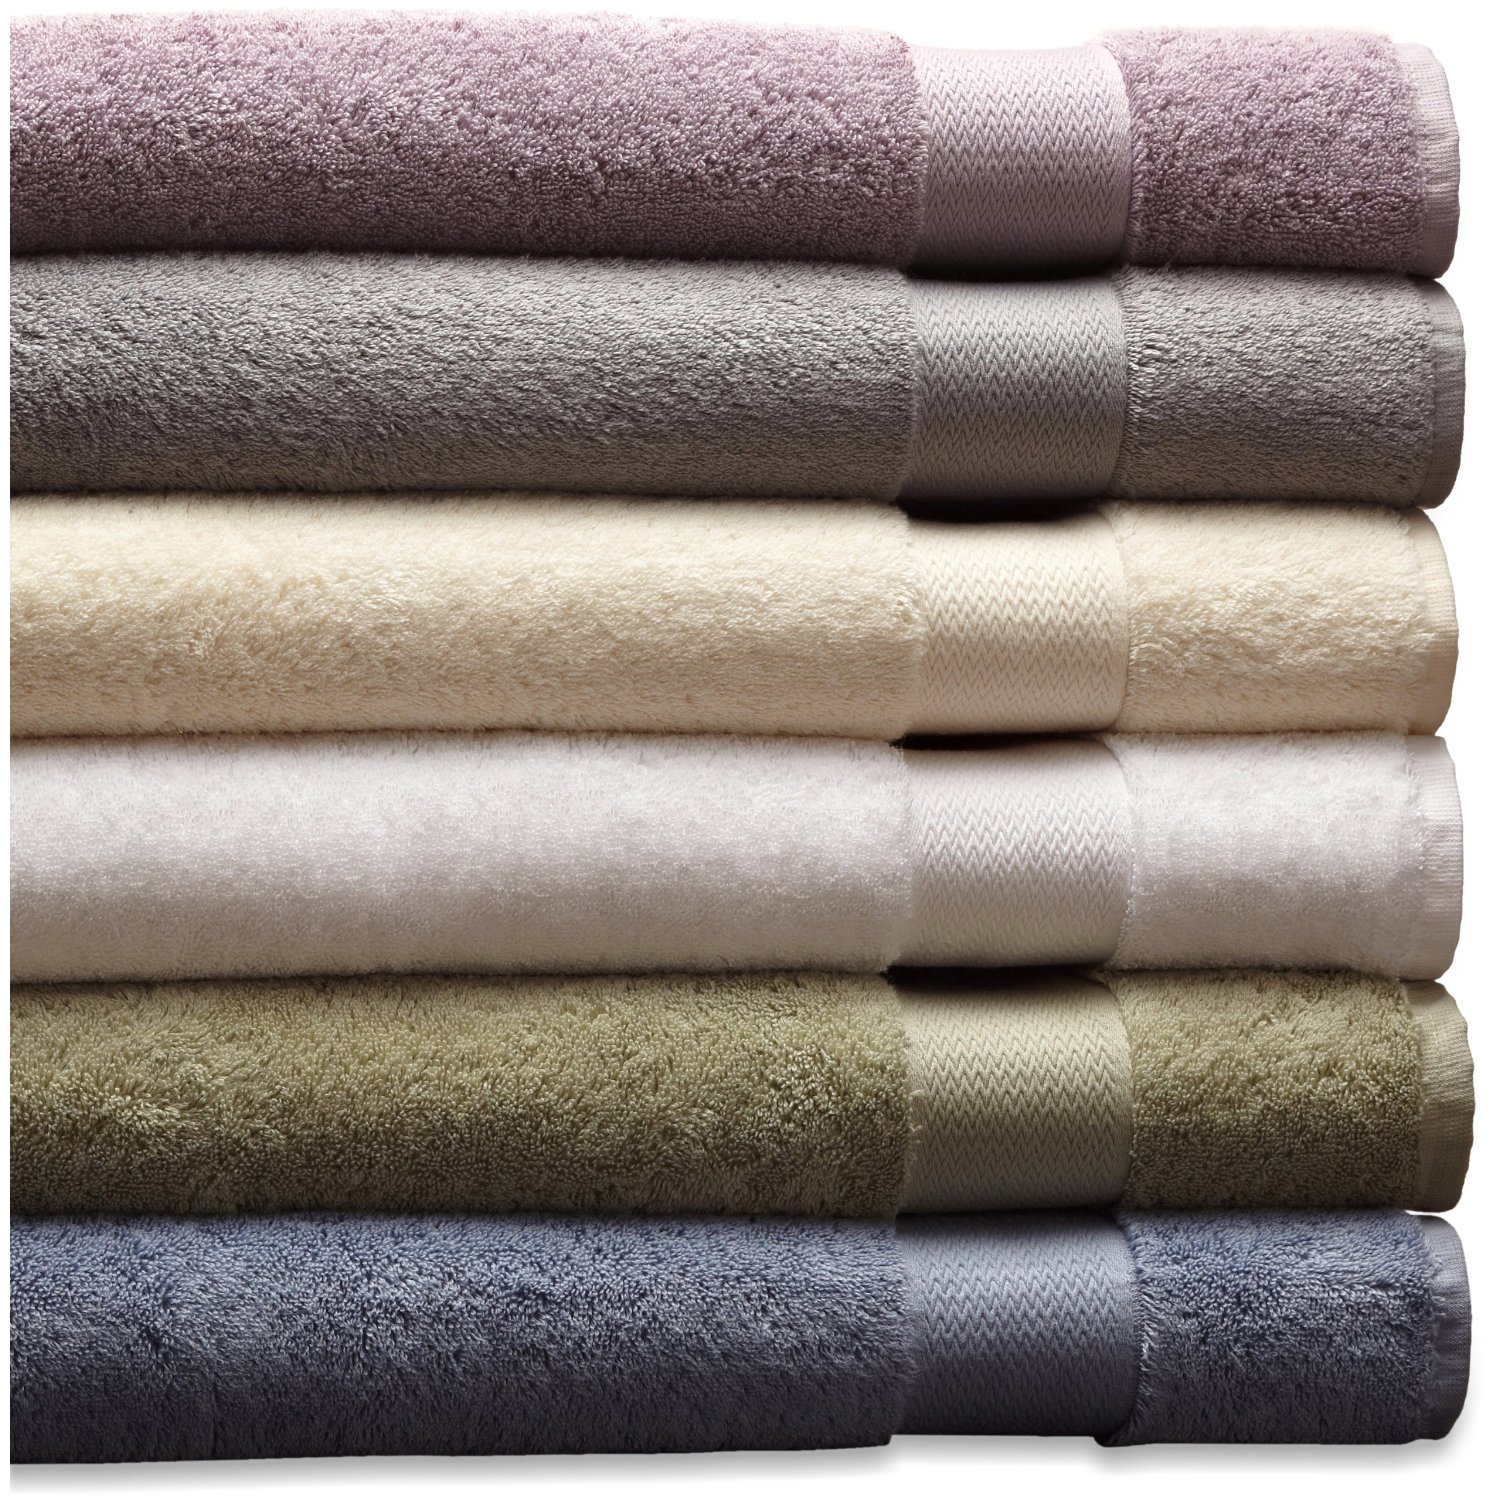 Save Up to 60% on Pinzon Oversized Luxury Supima Cotton Towels